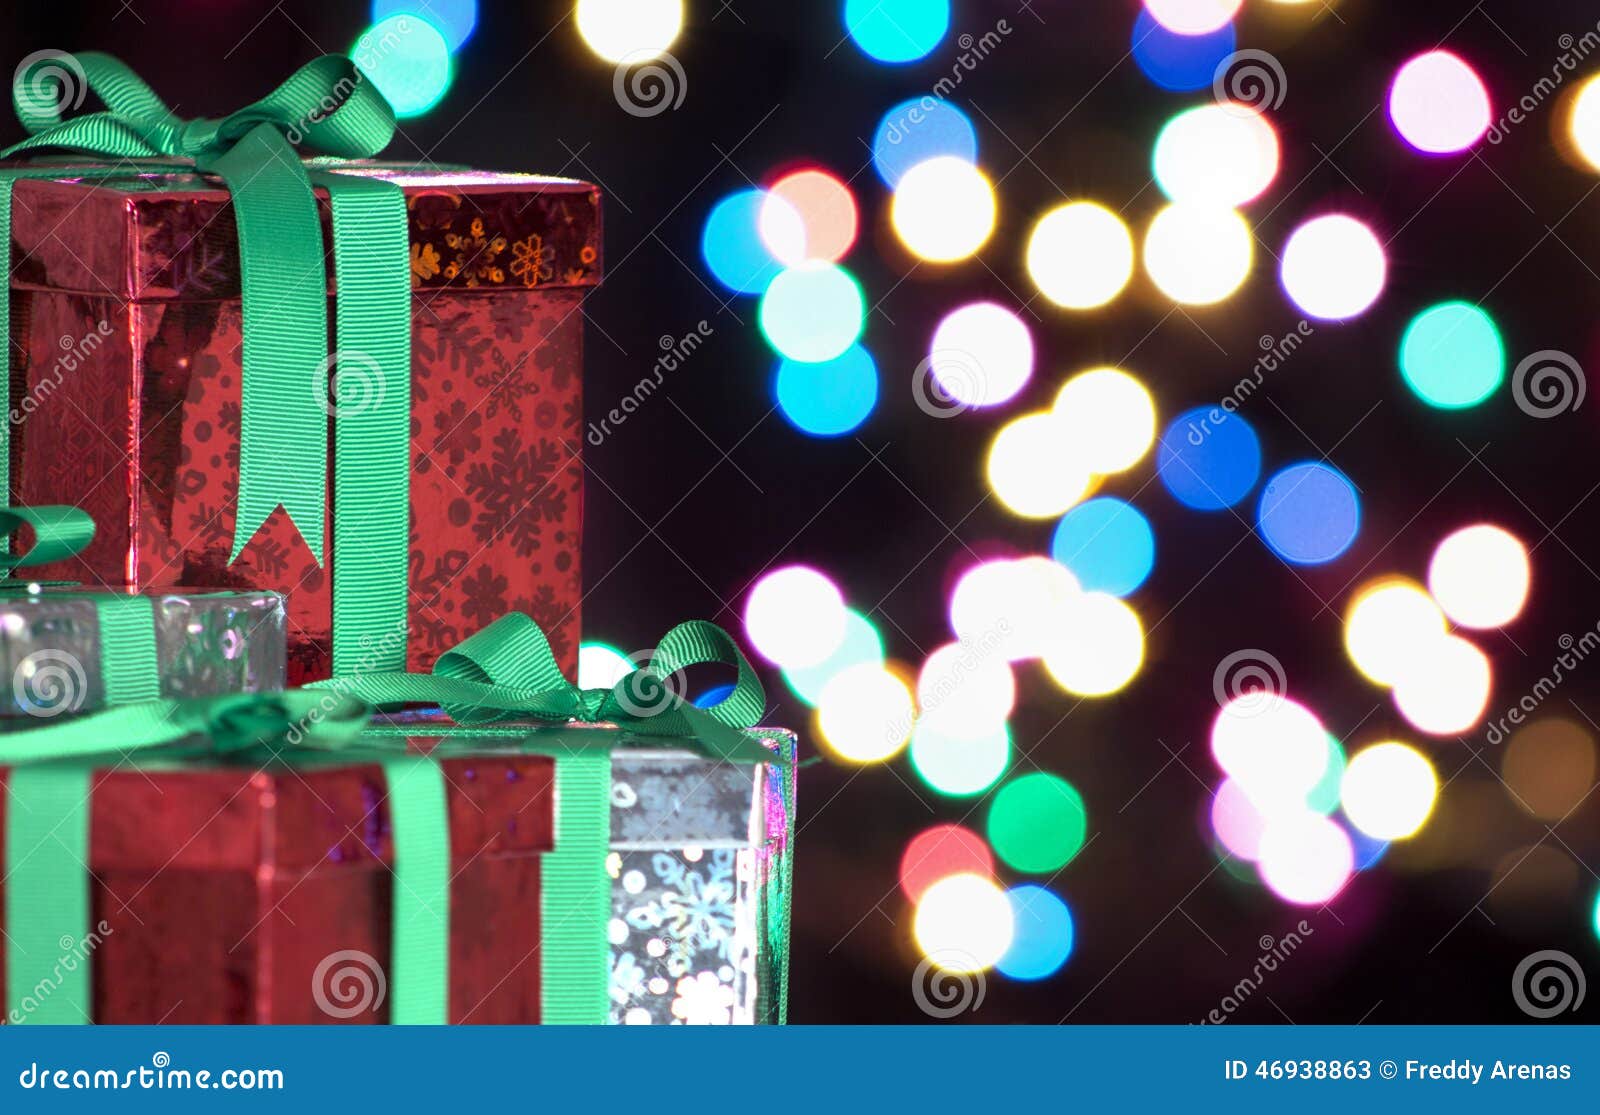 Christmas Gifts Background stock image. Image of christmas - 46938863